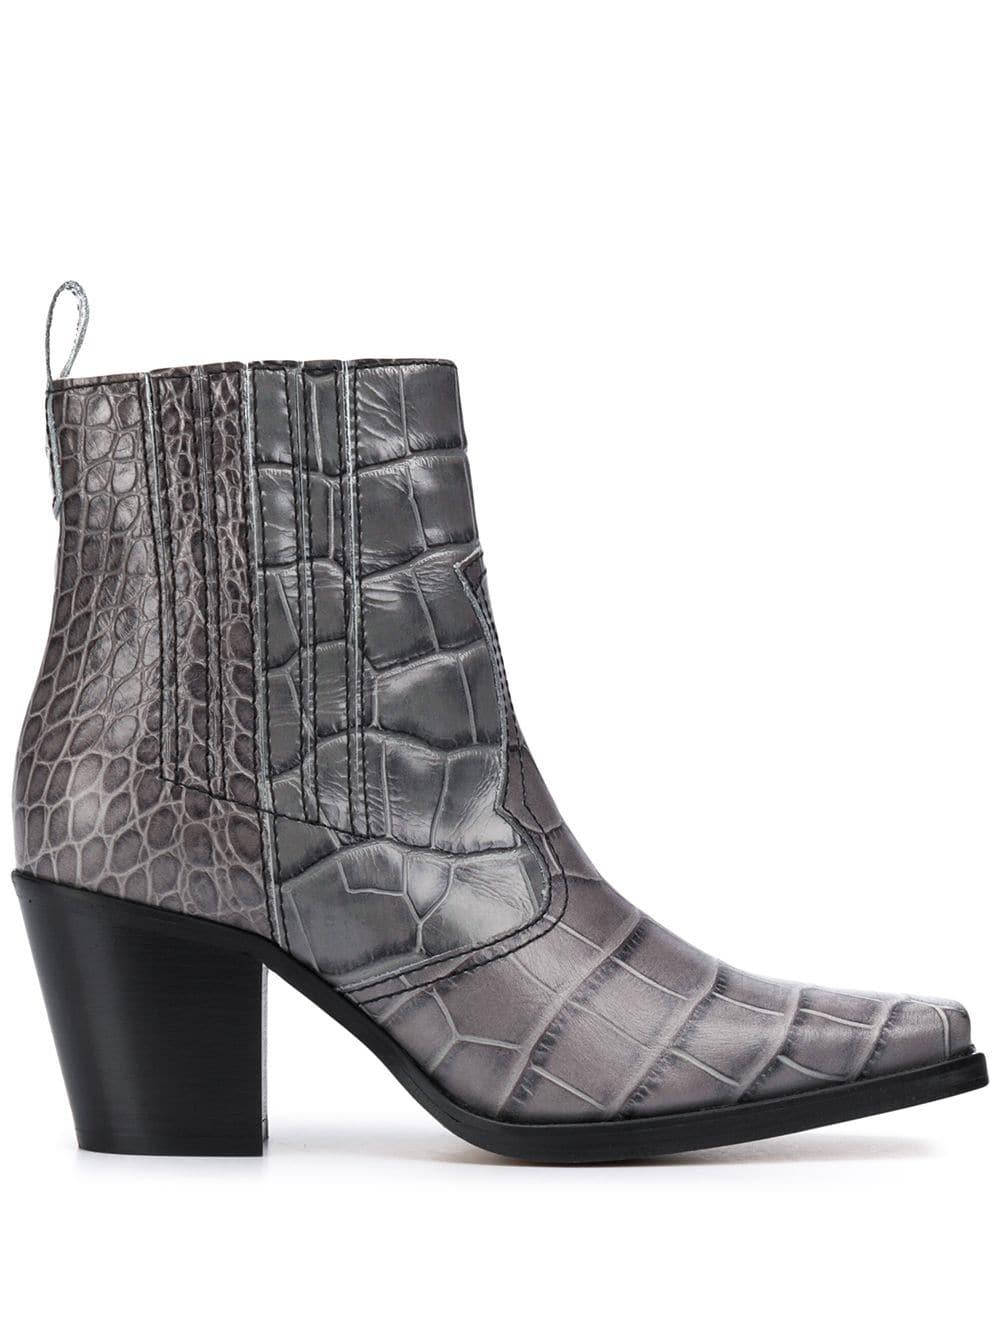 Ganni Callie Western Crocodile-effect Leather Boots in Gray | Lyst